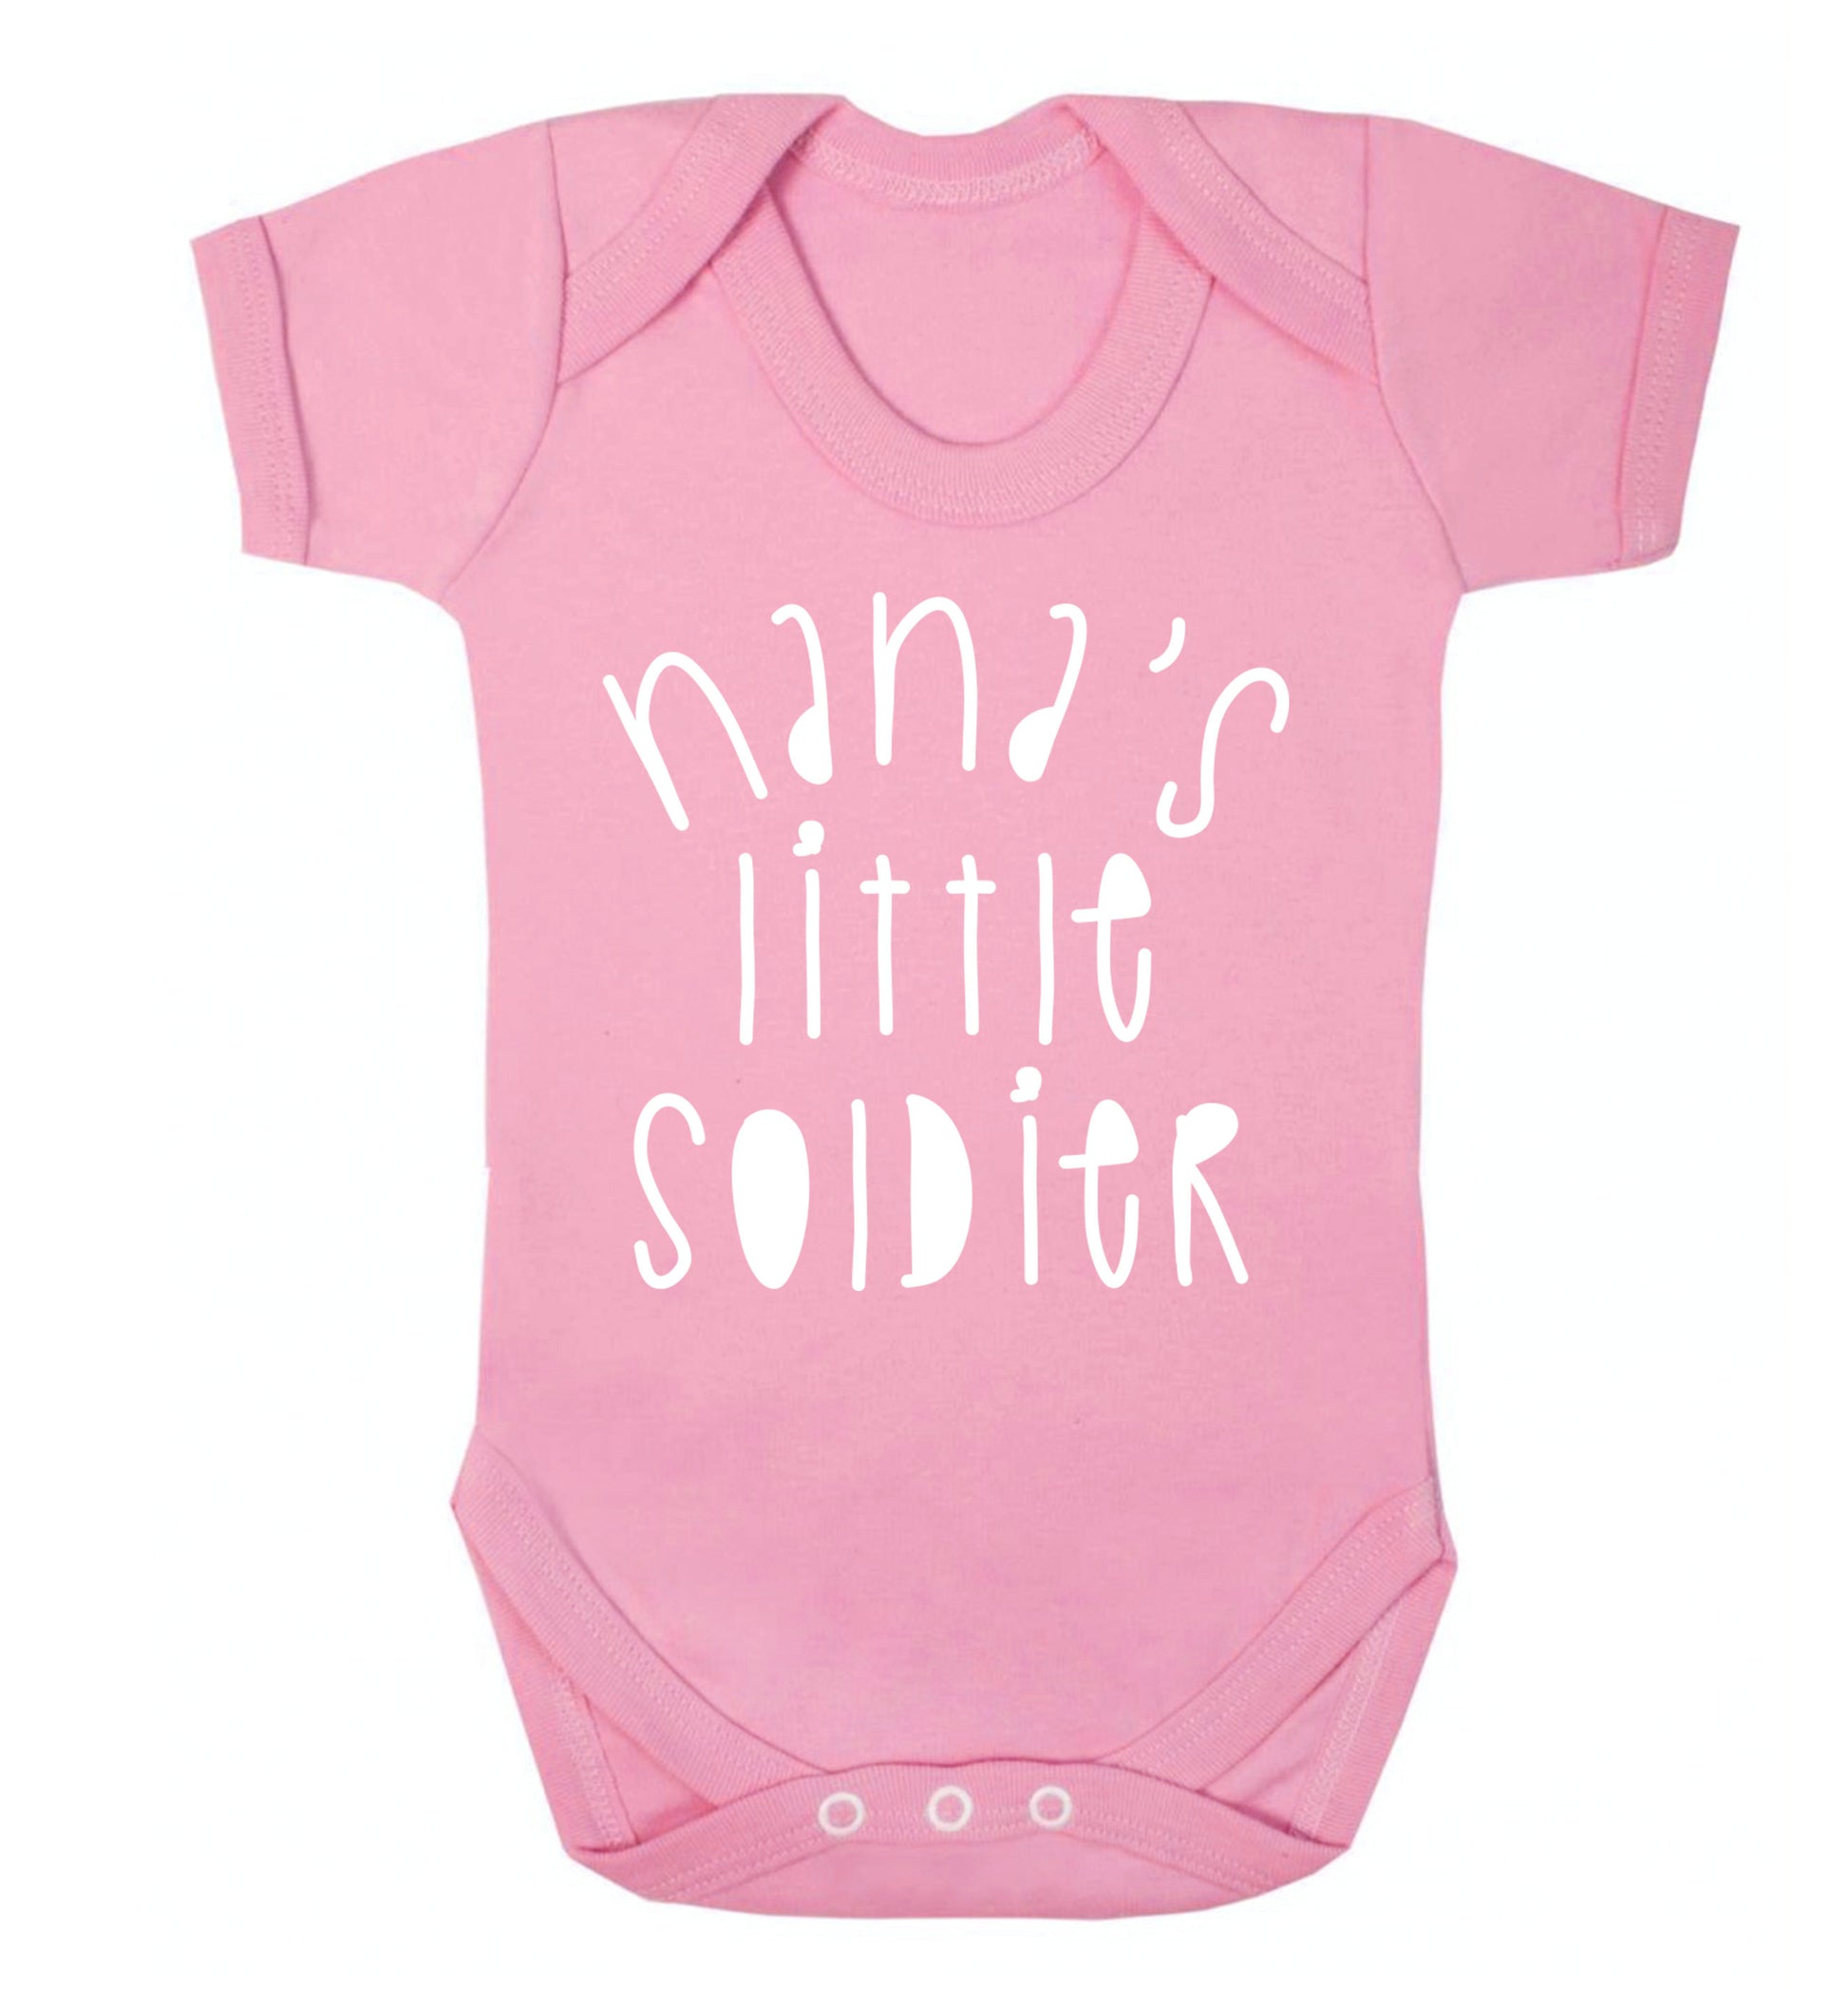 Nana's little soldier Baby Vest pale pink 18-24 months